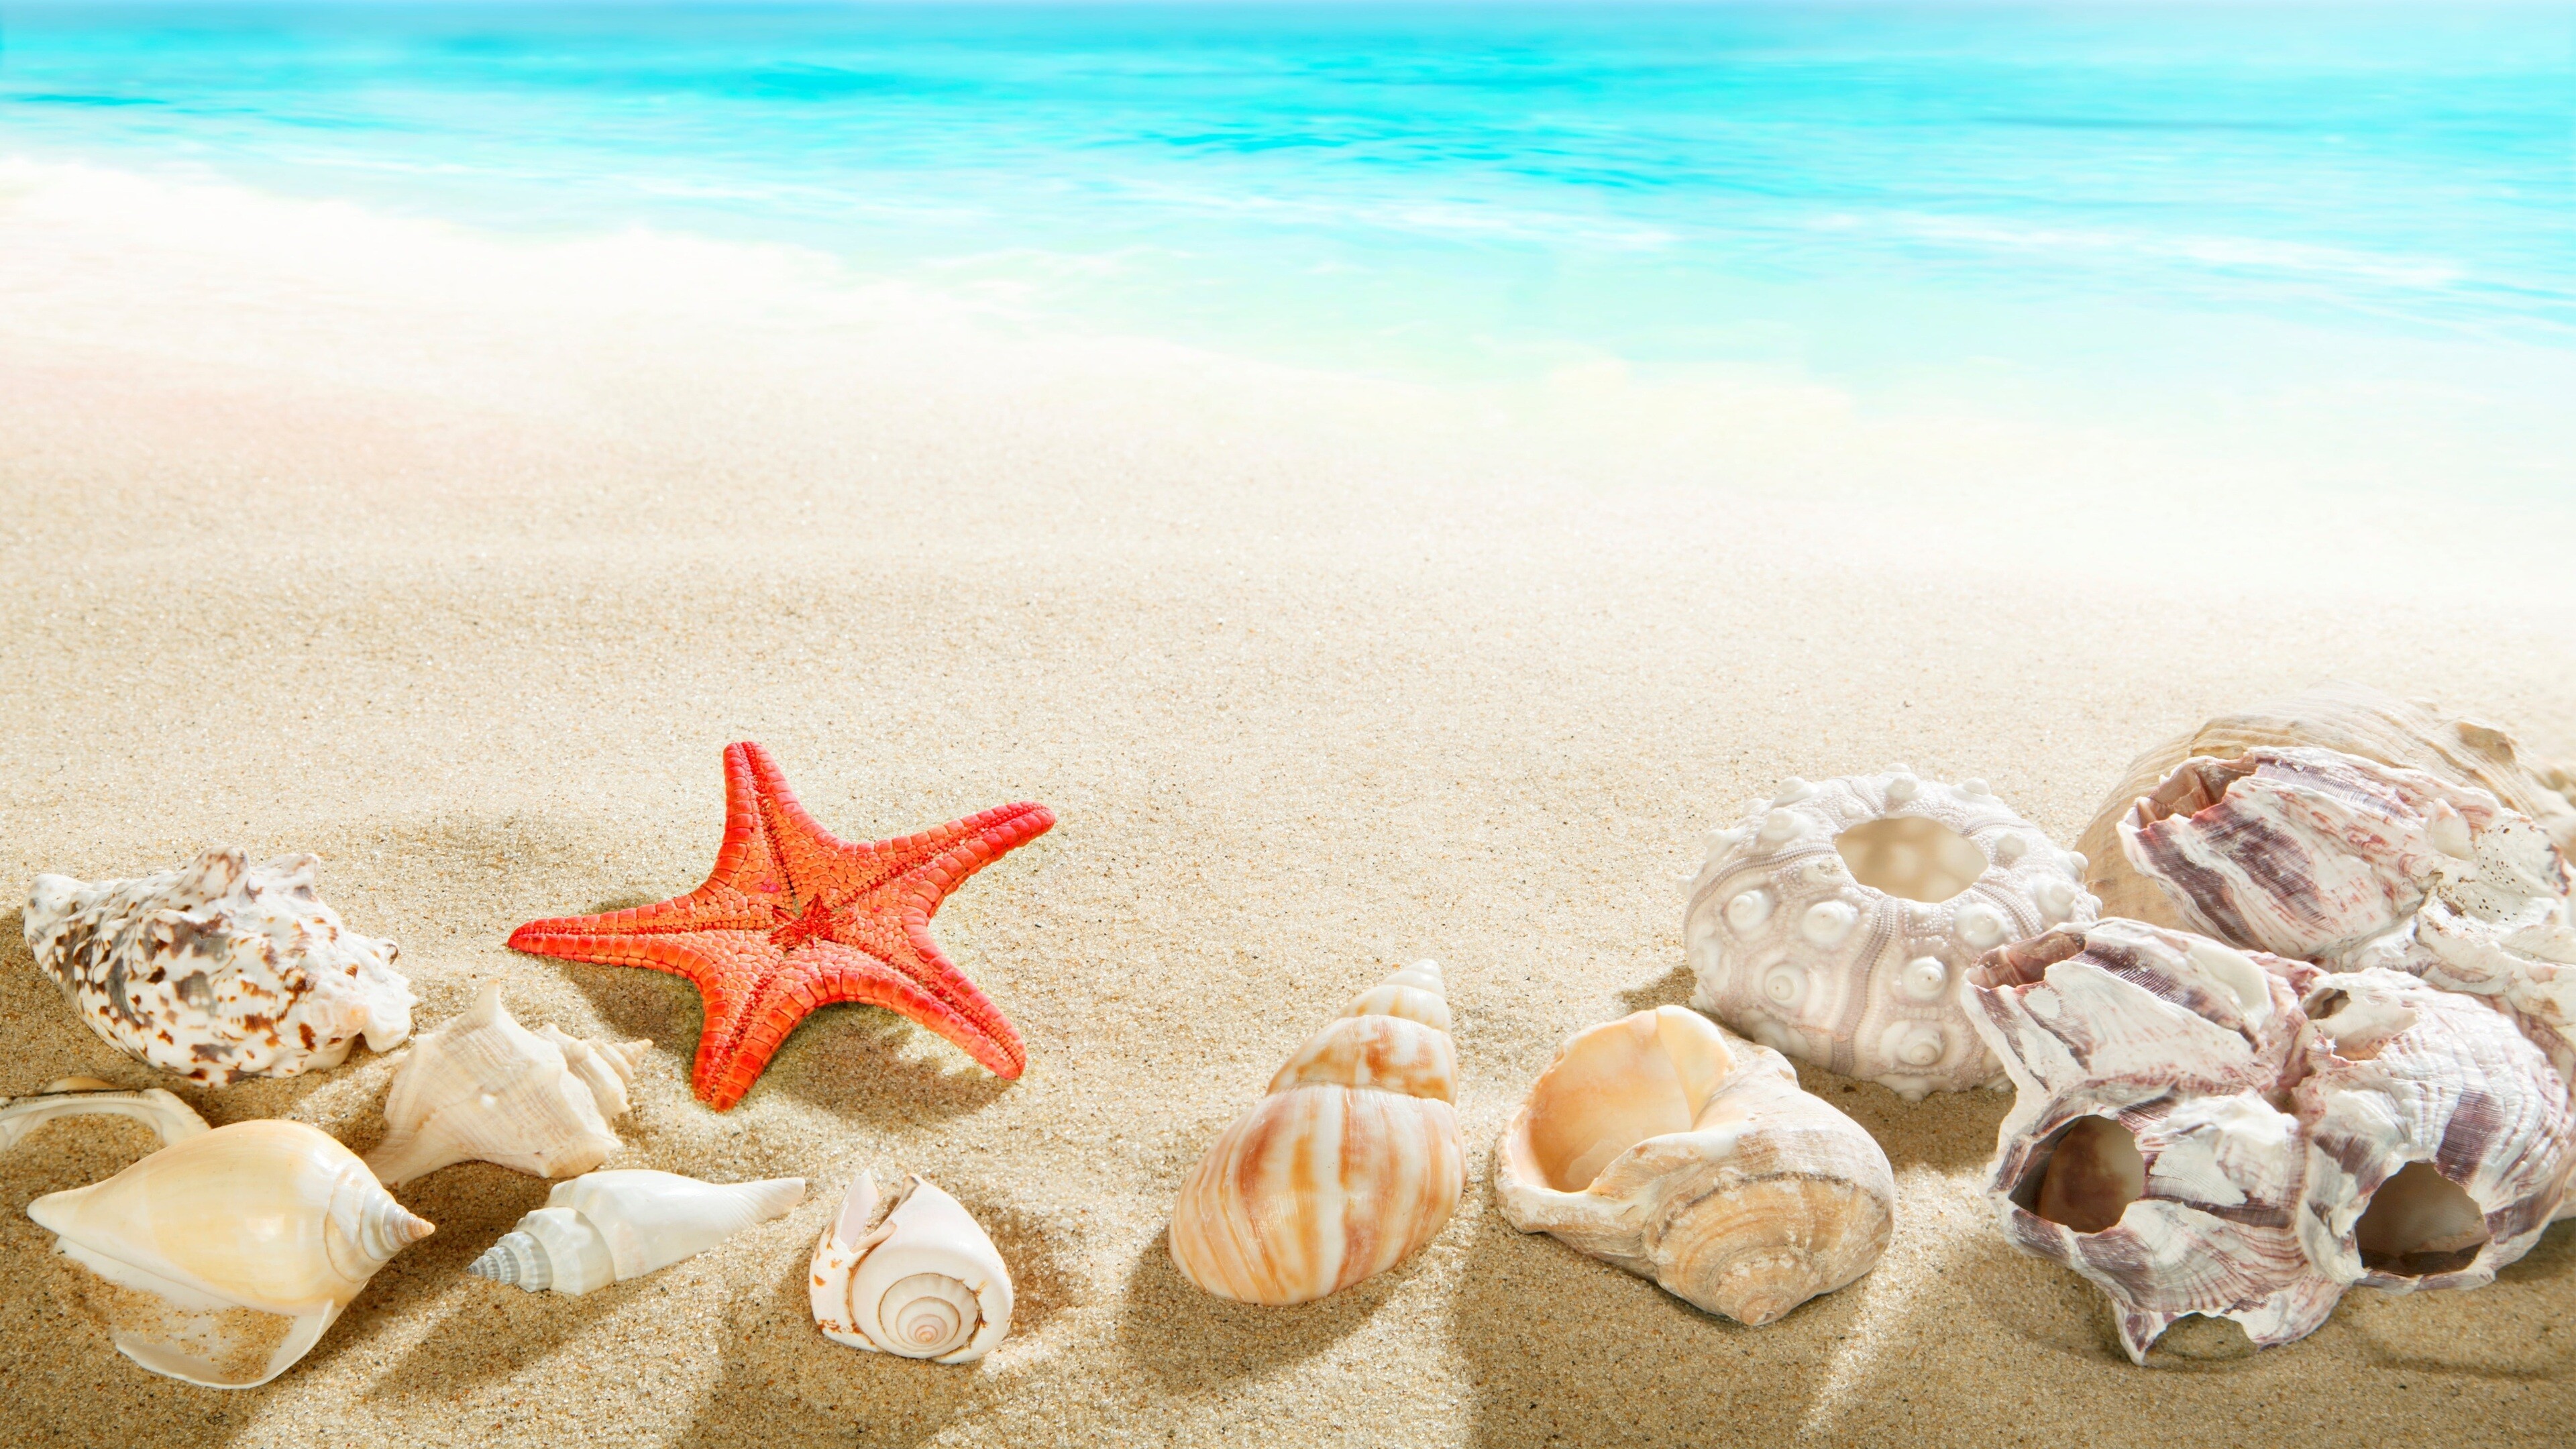 Starfish: Sea Shells and Star Fish on Sand Truly Amazing 4K Wallpaper. 3840x2160 4K Wallpaper.